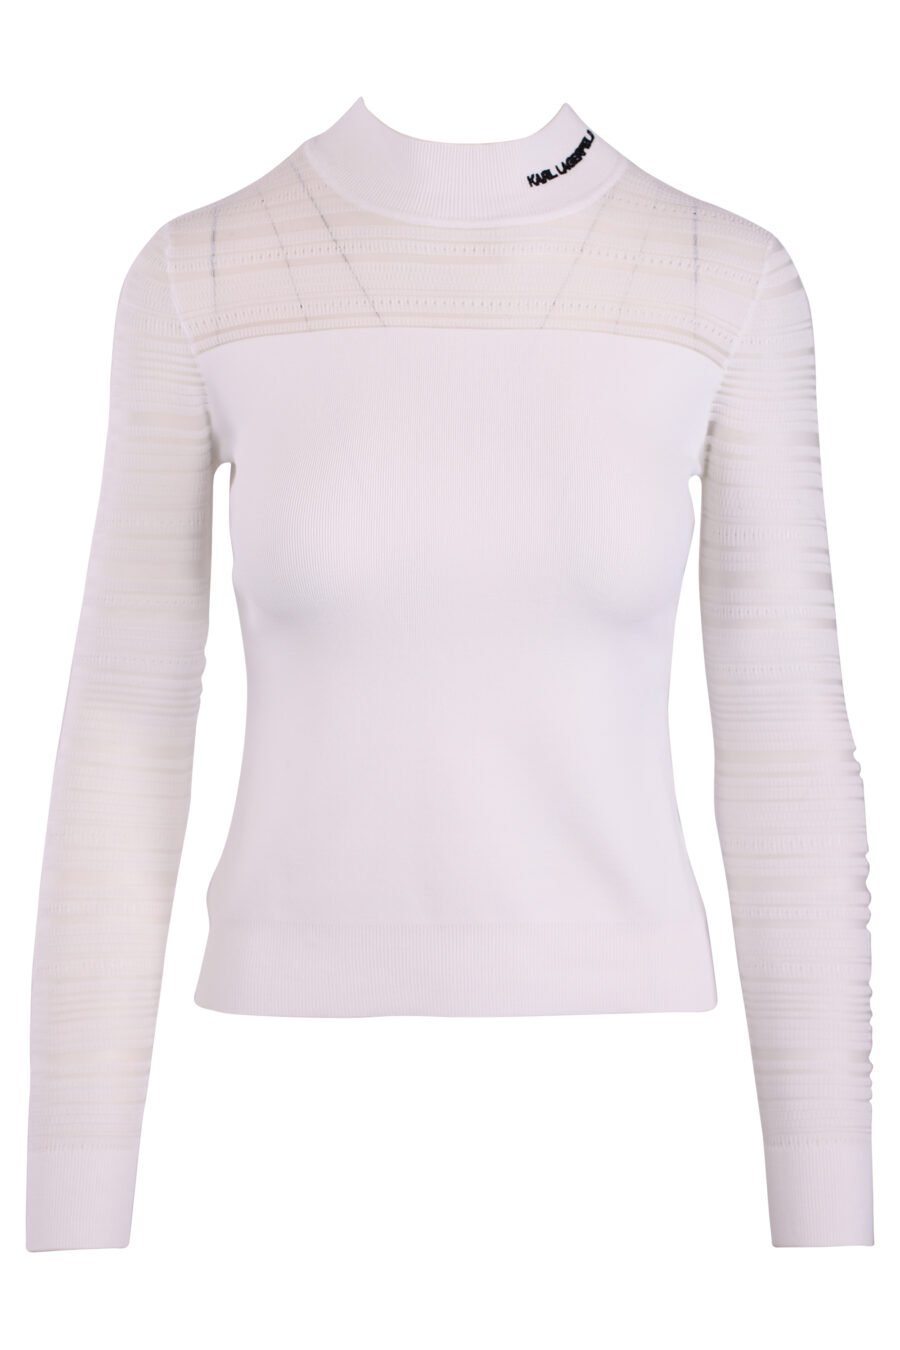 Semitransparent long sleeve white T-shirt - IMG 3261